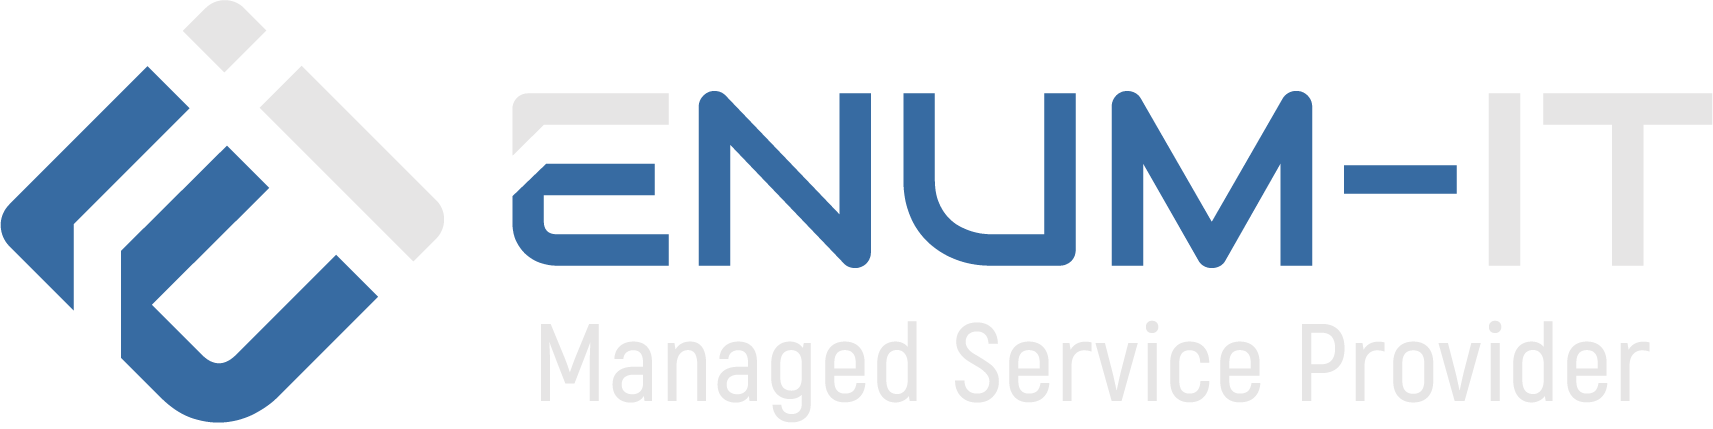 Enum-IT logo